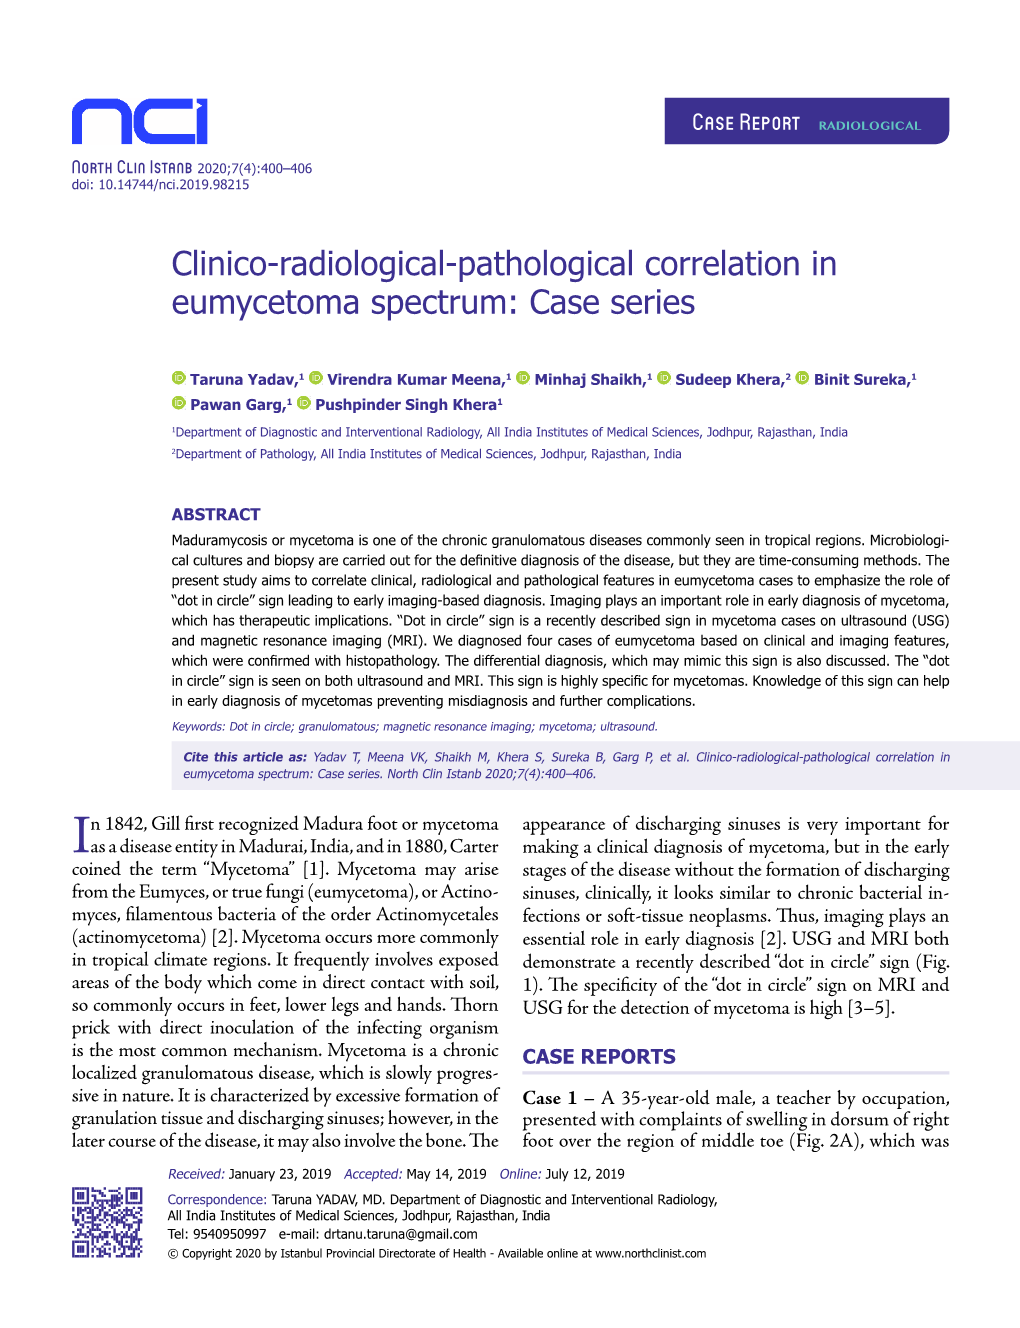 Clinico-Radiological-Pathological Correlation in Eumycetoma Spectrum: Case Series